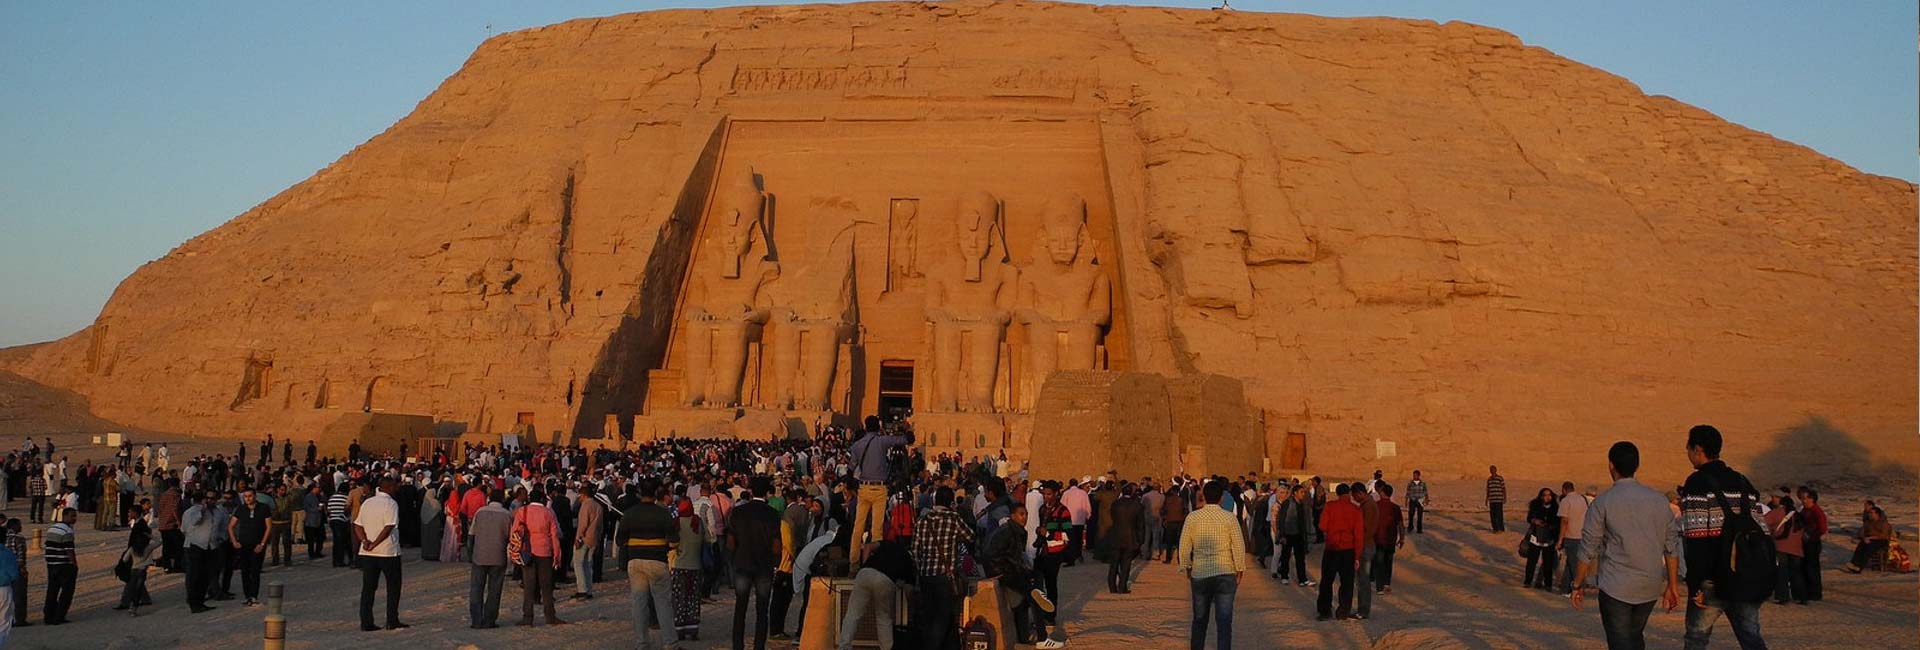 Abu Simbel Sun Festival Tour From Aswan